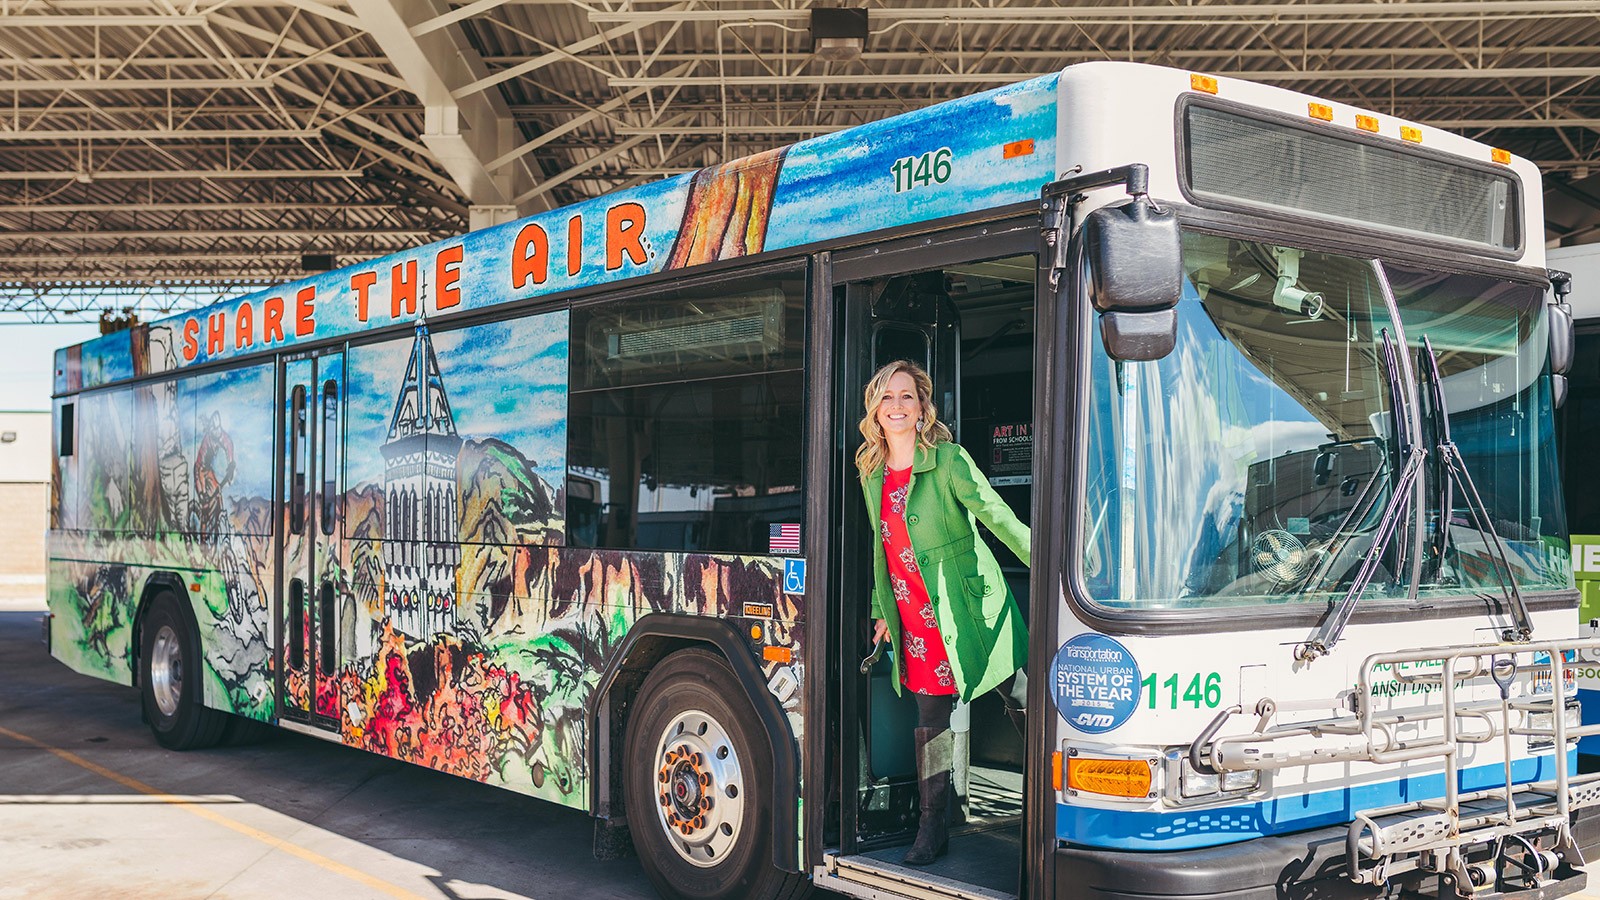 Hughes Villa standing next to an Art in Transit bus.